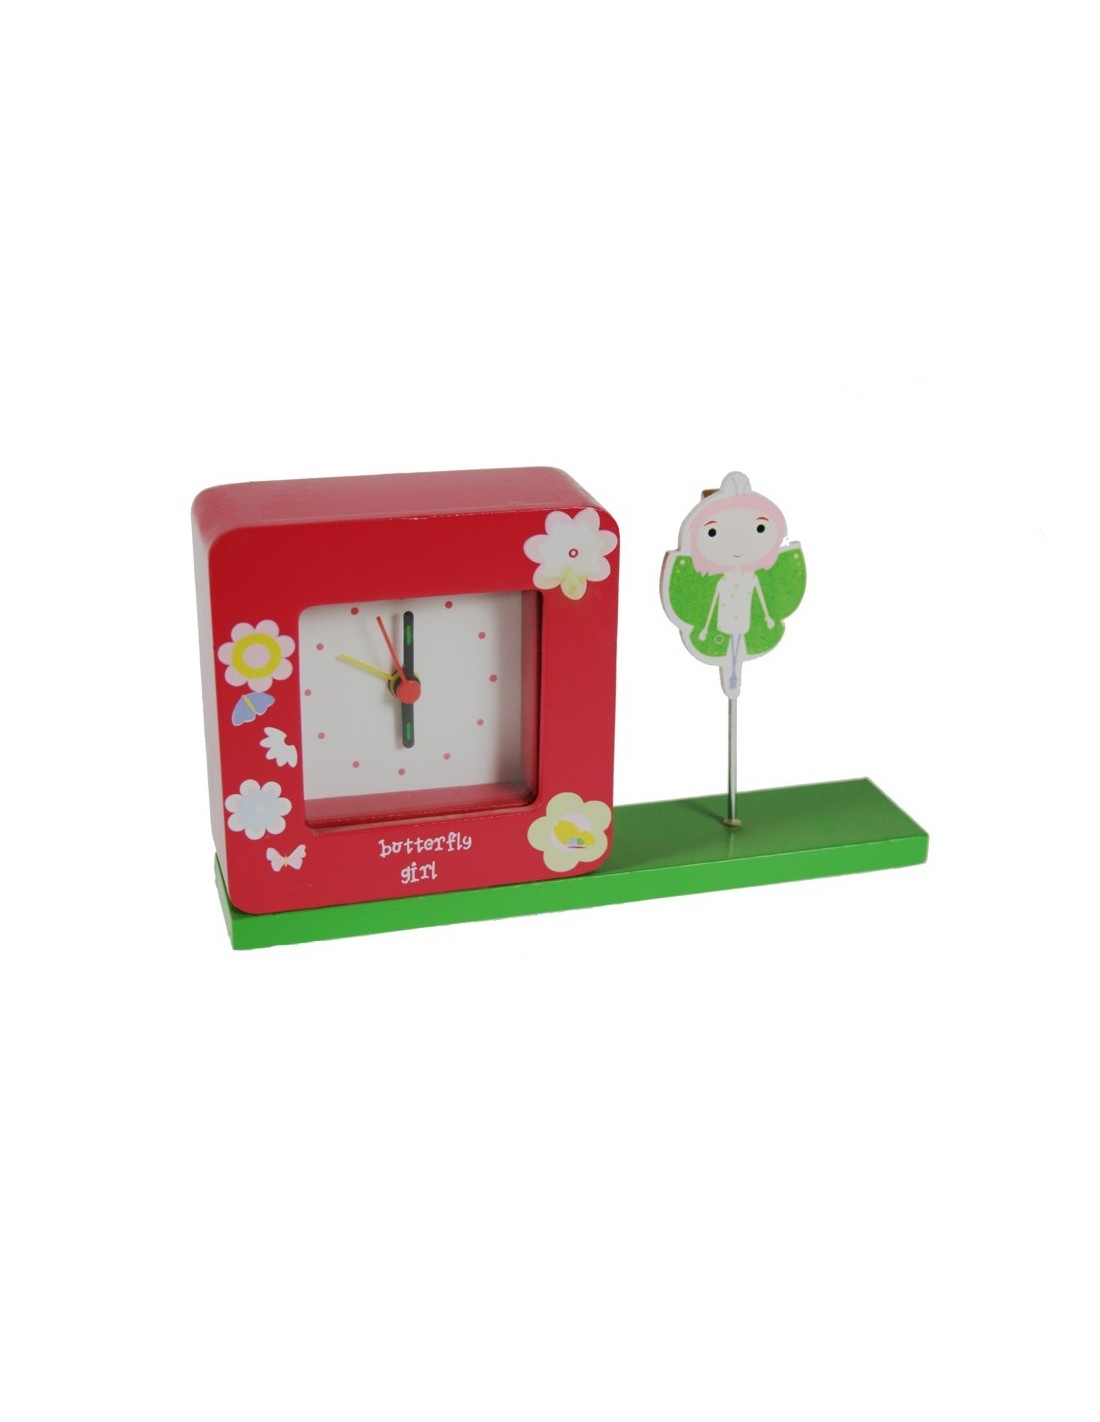 Reloj despertador infantil con porta notas. Medidas:12x20x5 cm.